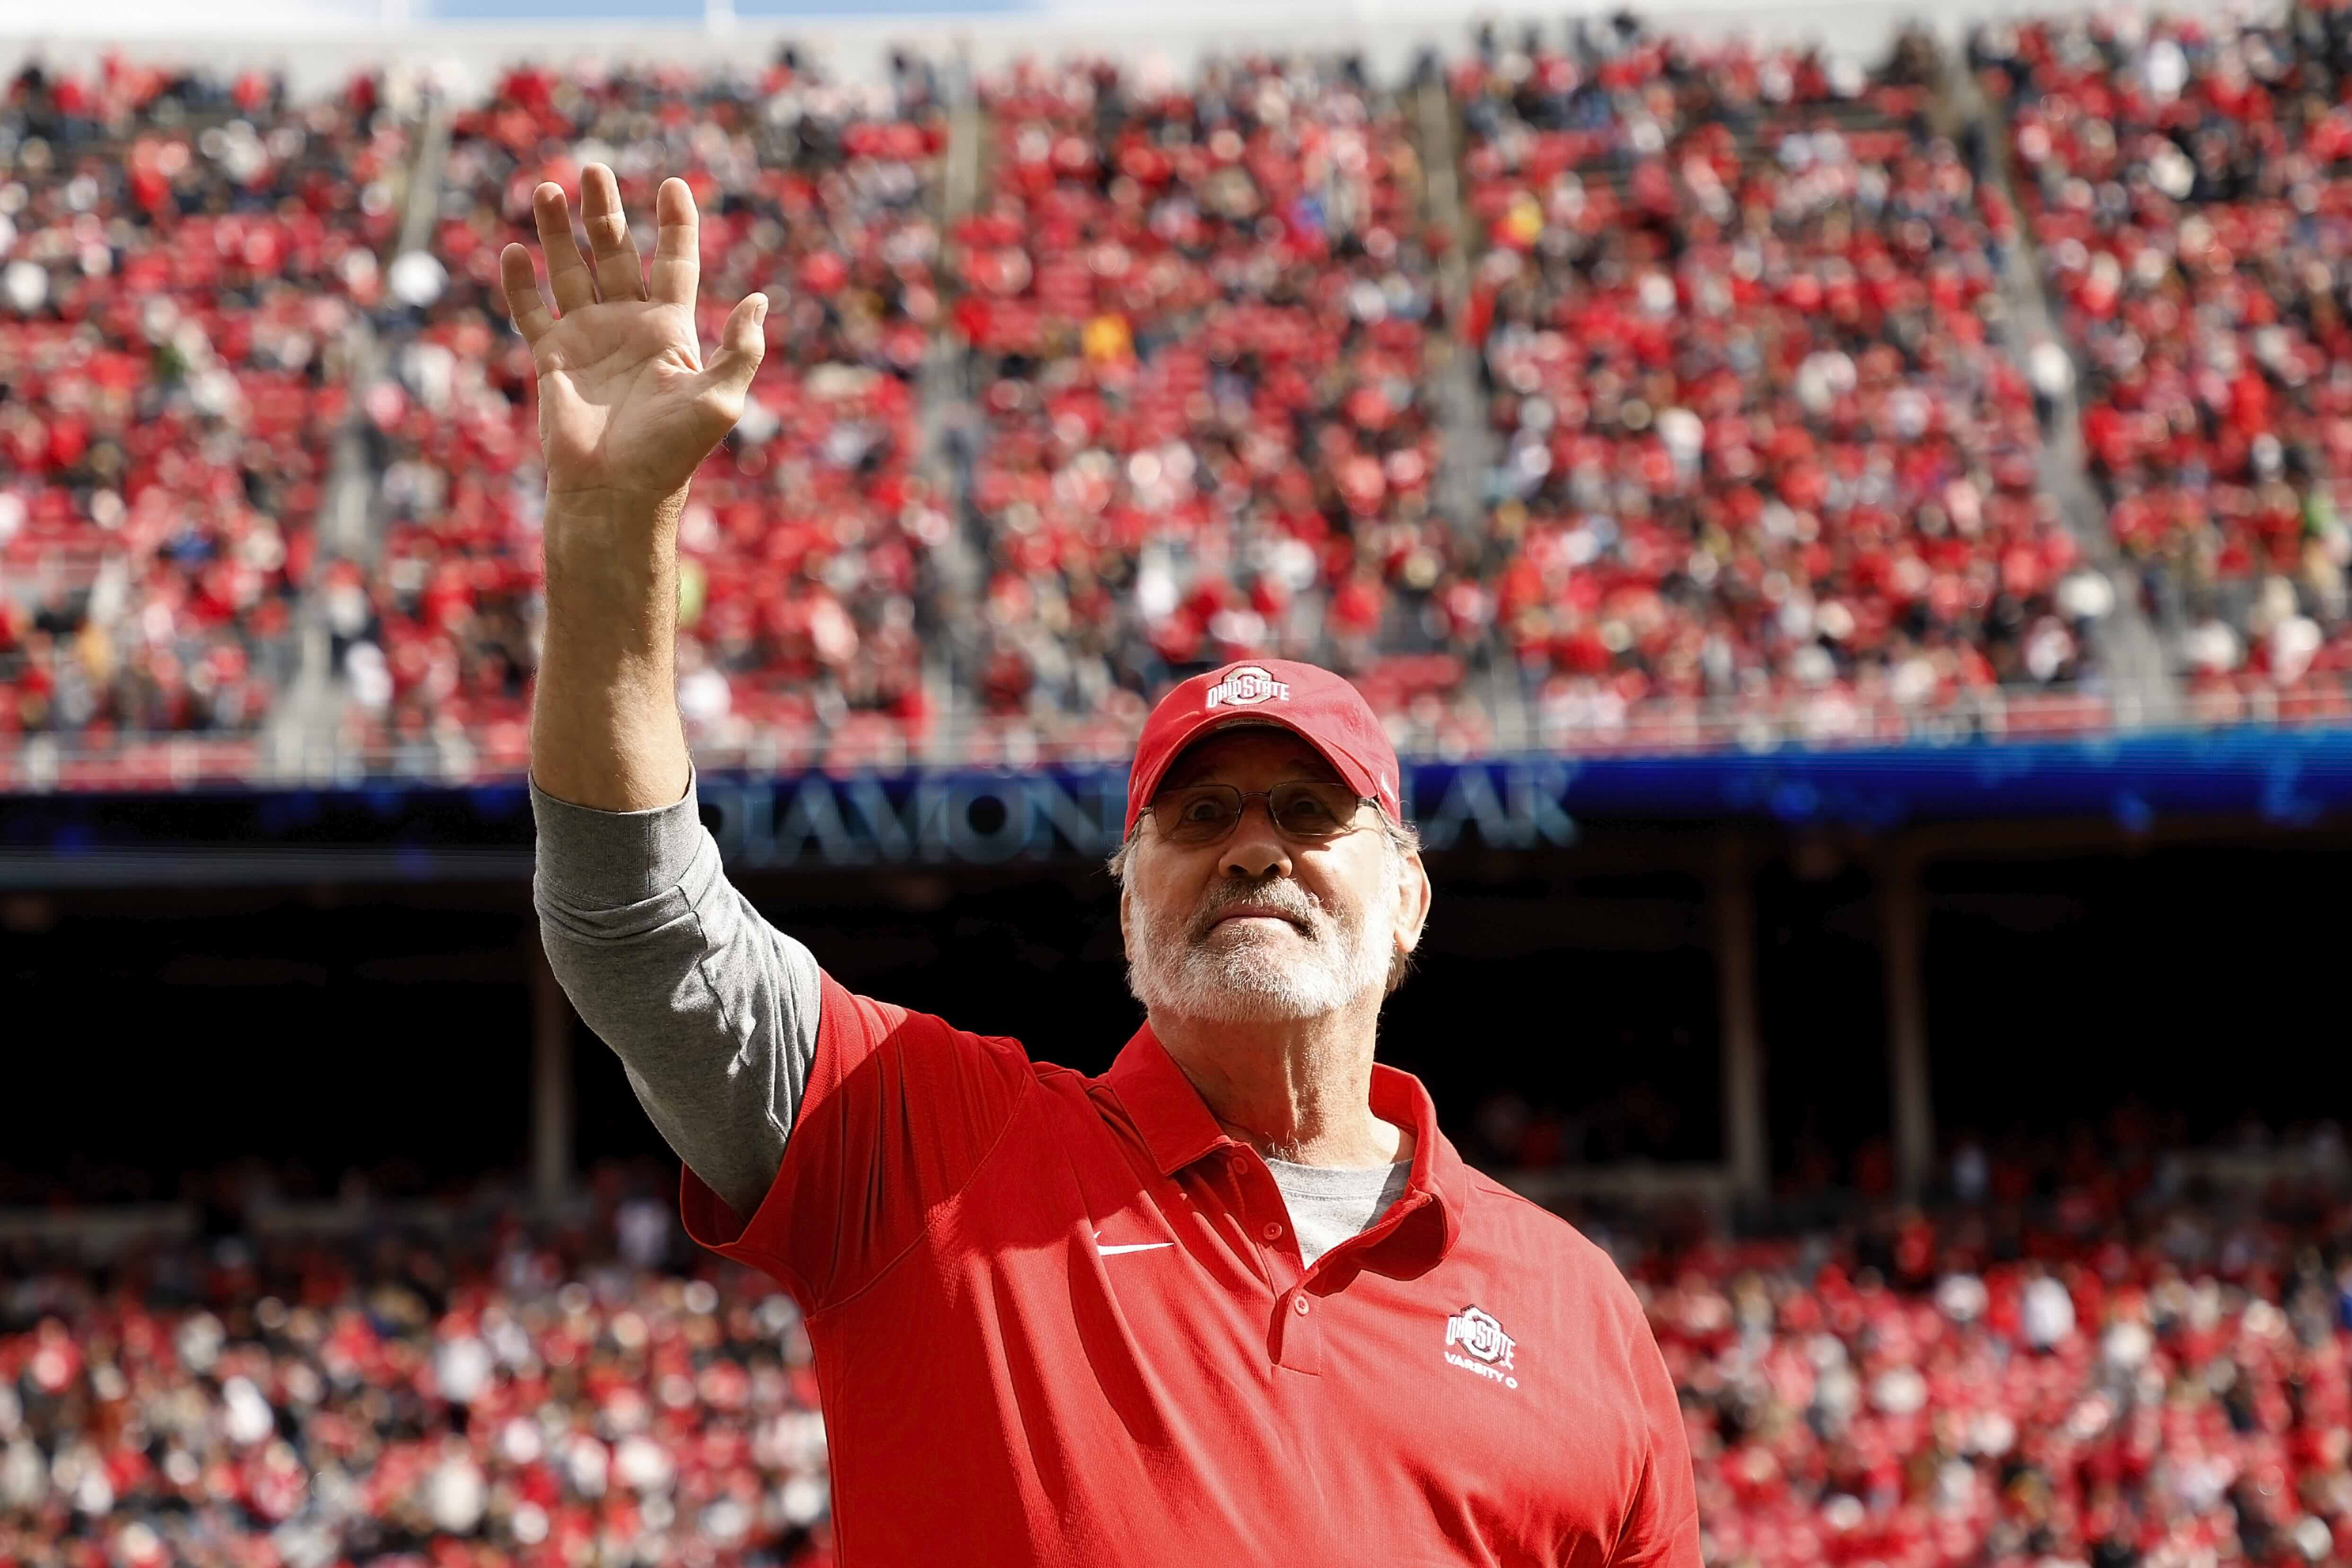 Ohio State alumni Rick Middleton waving to crowd on football field